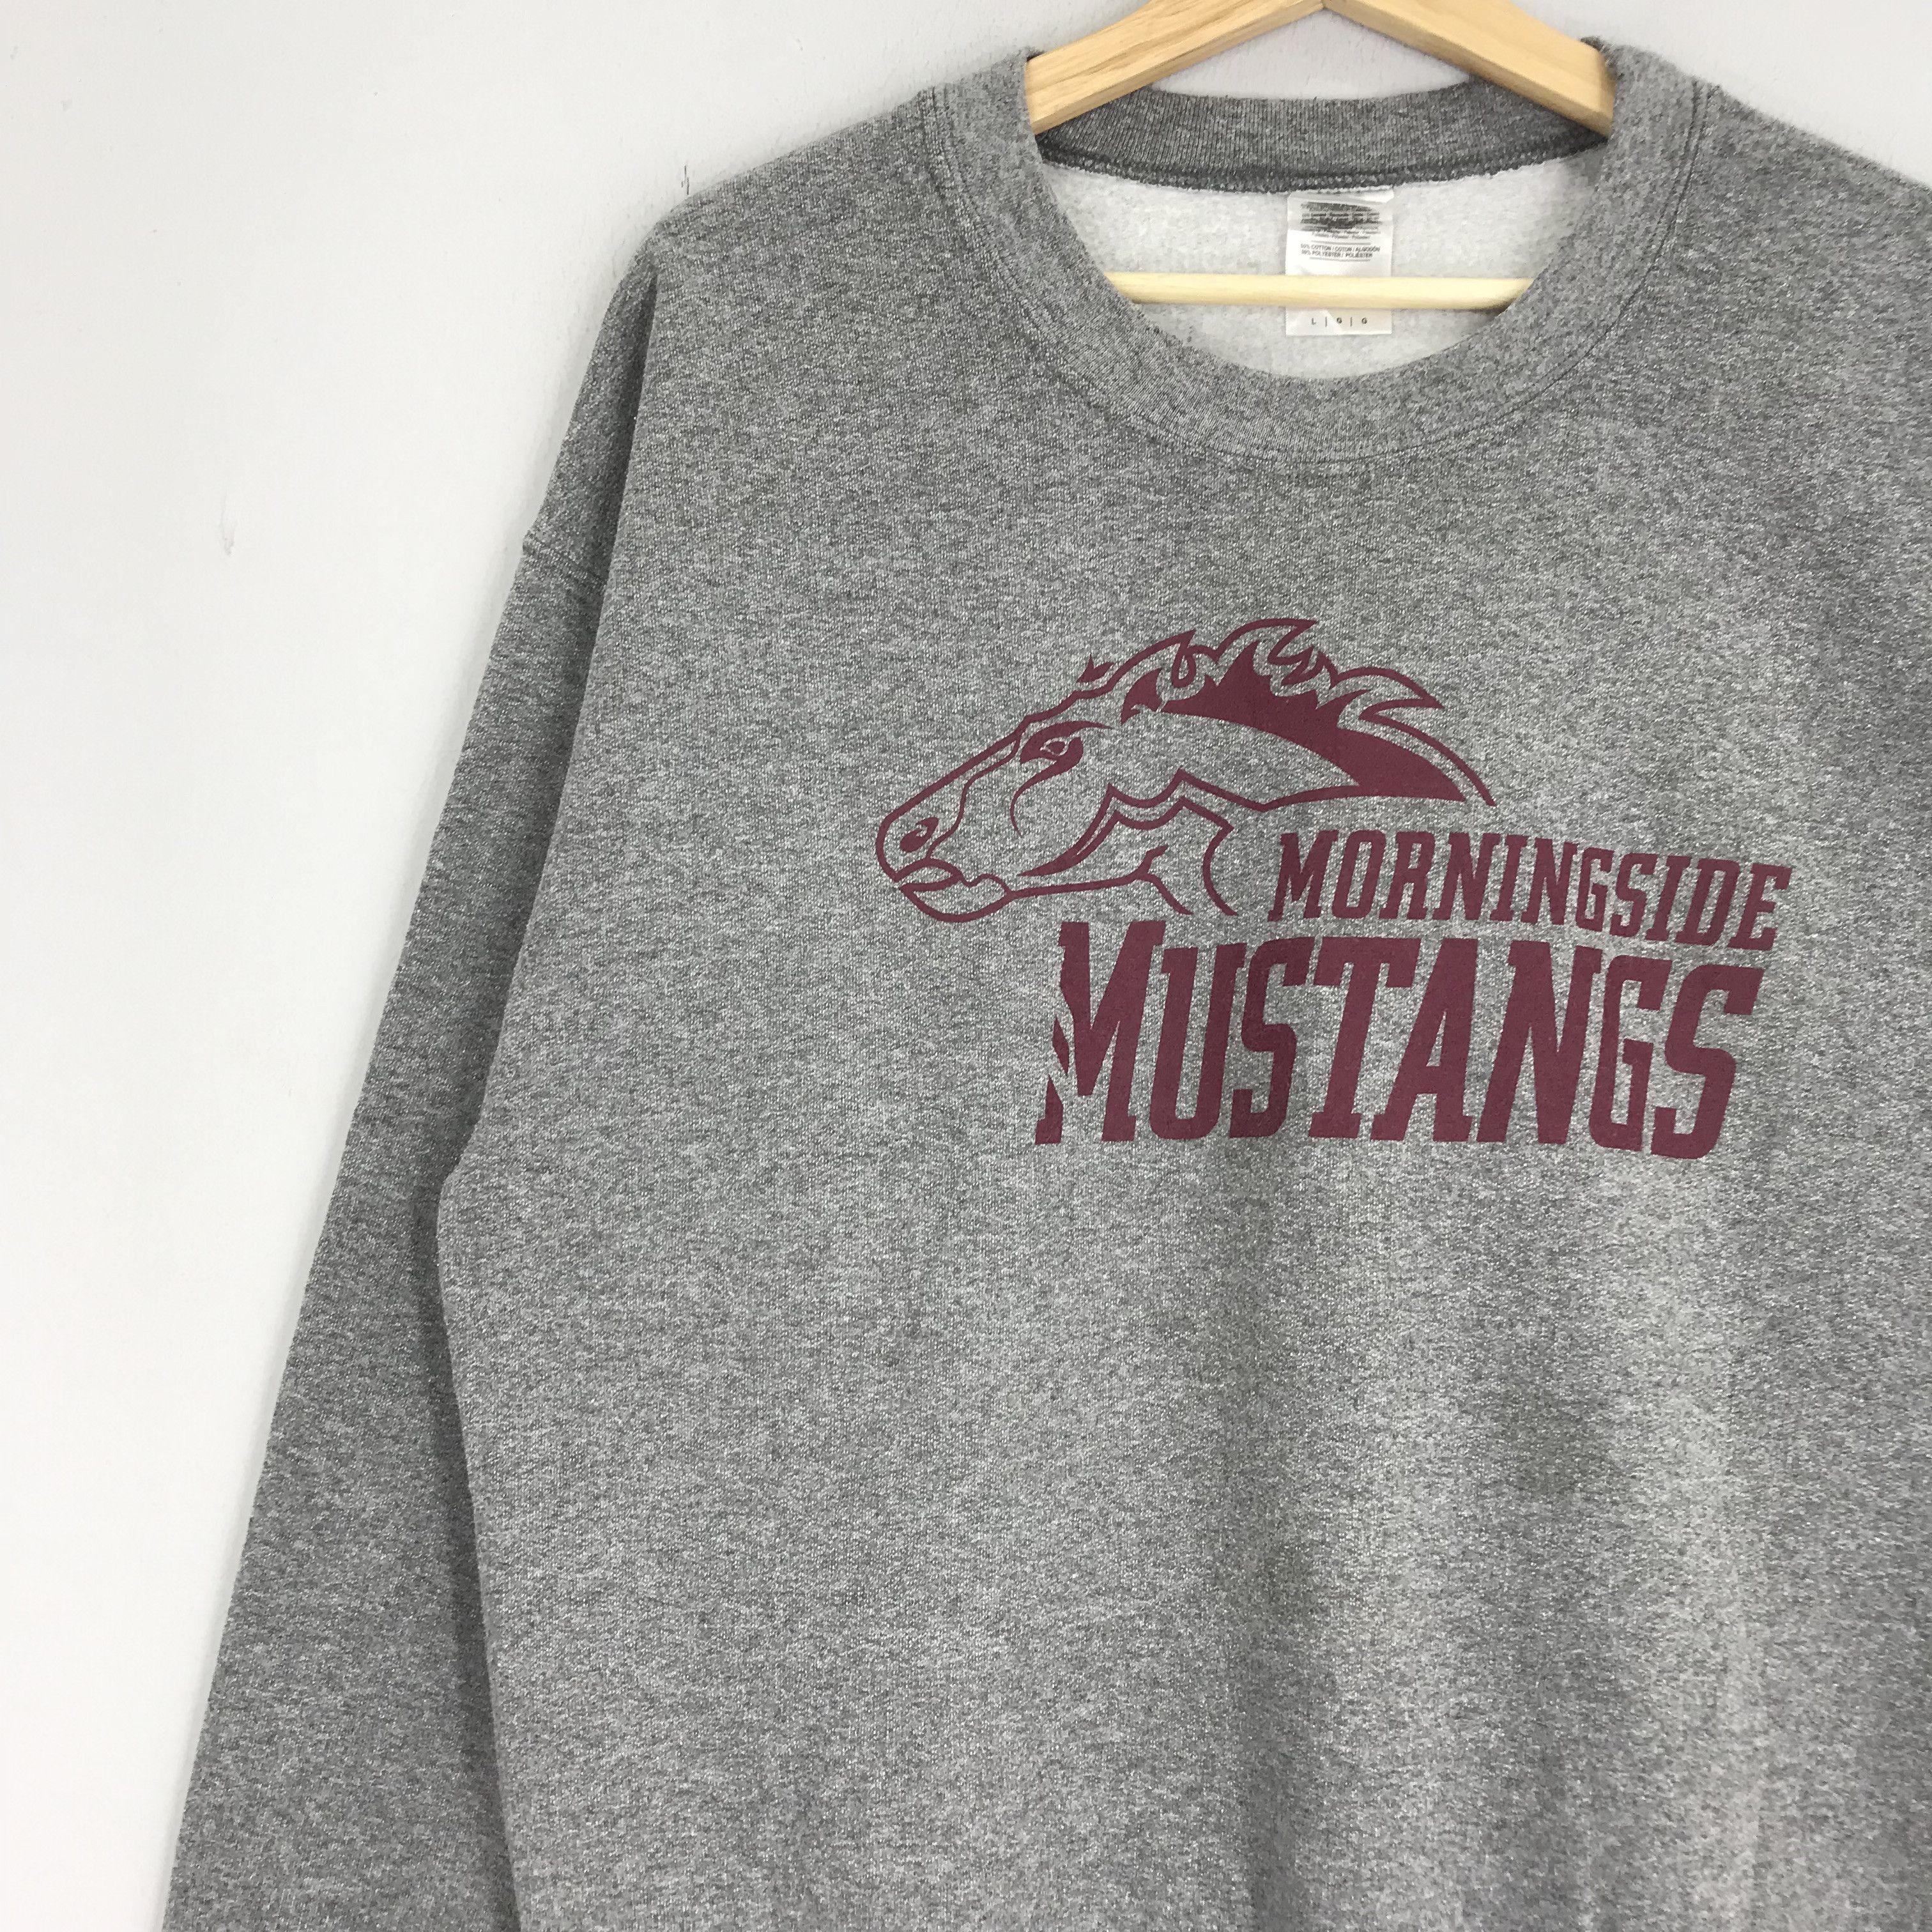 Vintage Vintage Morningside Mustang College Sweatshirt Mustang Size US M / EU 48-50 / 2 - 4 Thumbnail